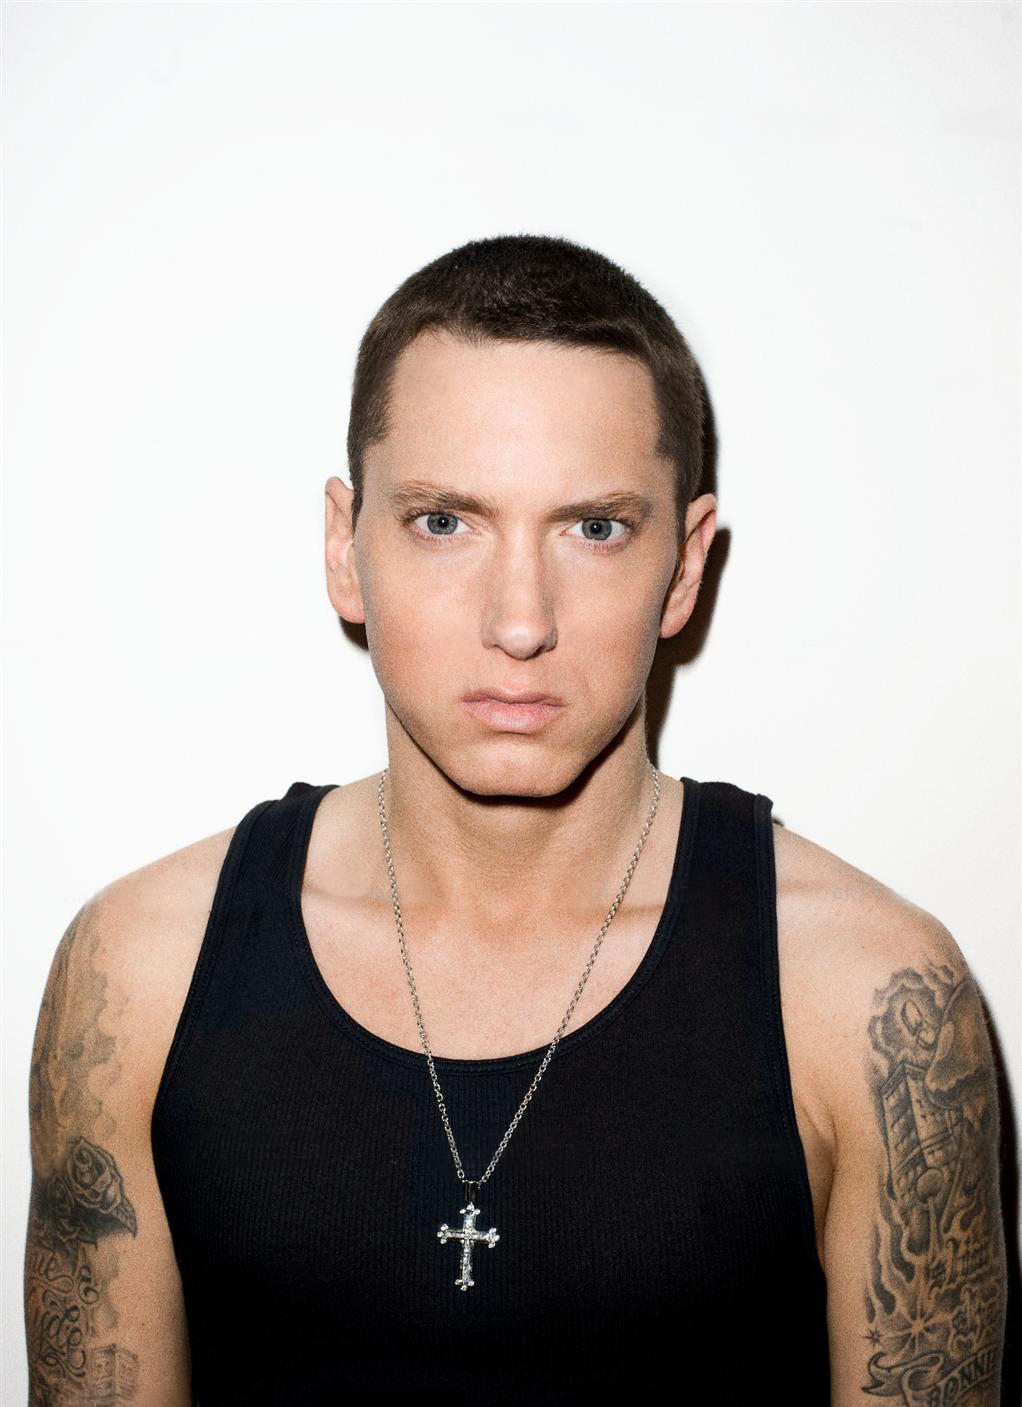 Eminem Photo 59 Of 125 Pics Wallpaper Photo 561009 Theplace2